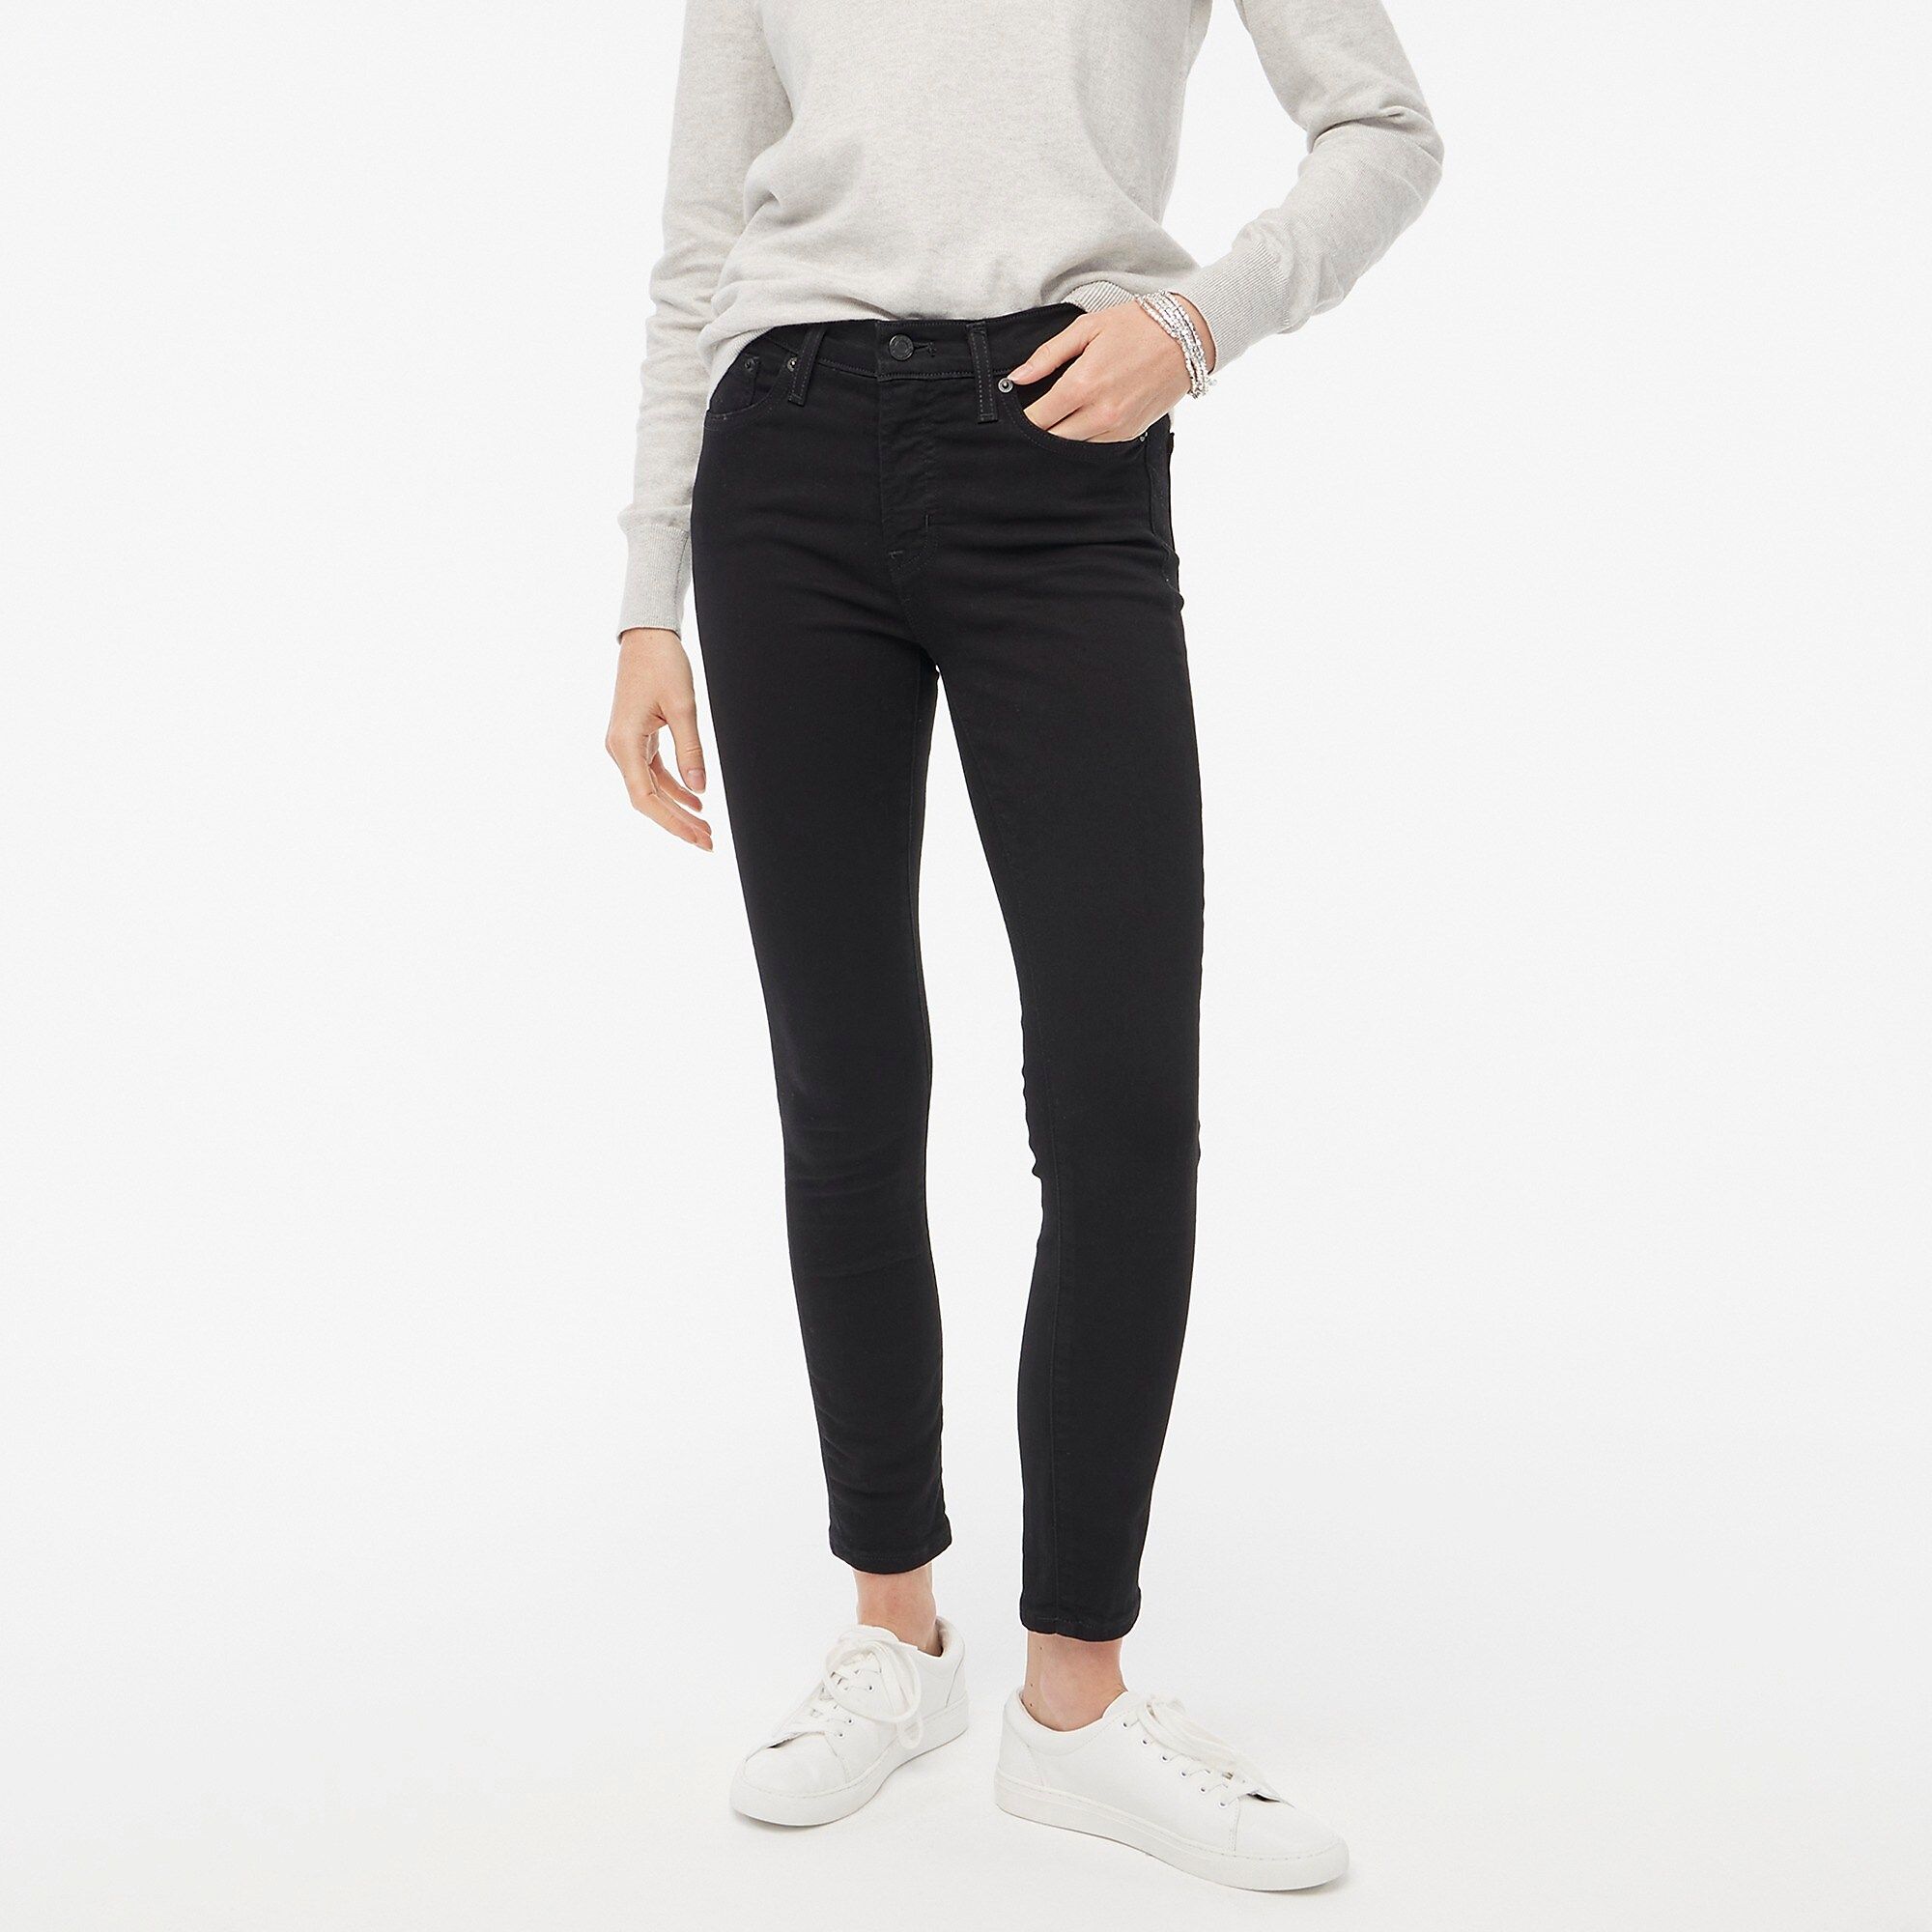 8" midrise skinny jean in black denim | J.Crew Factory